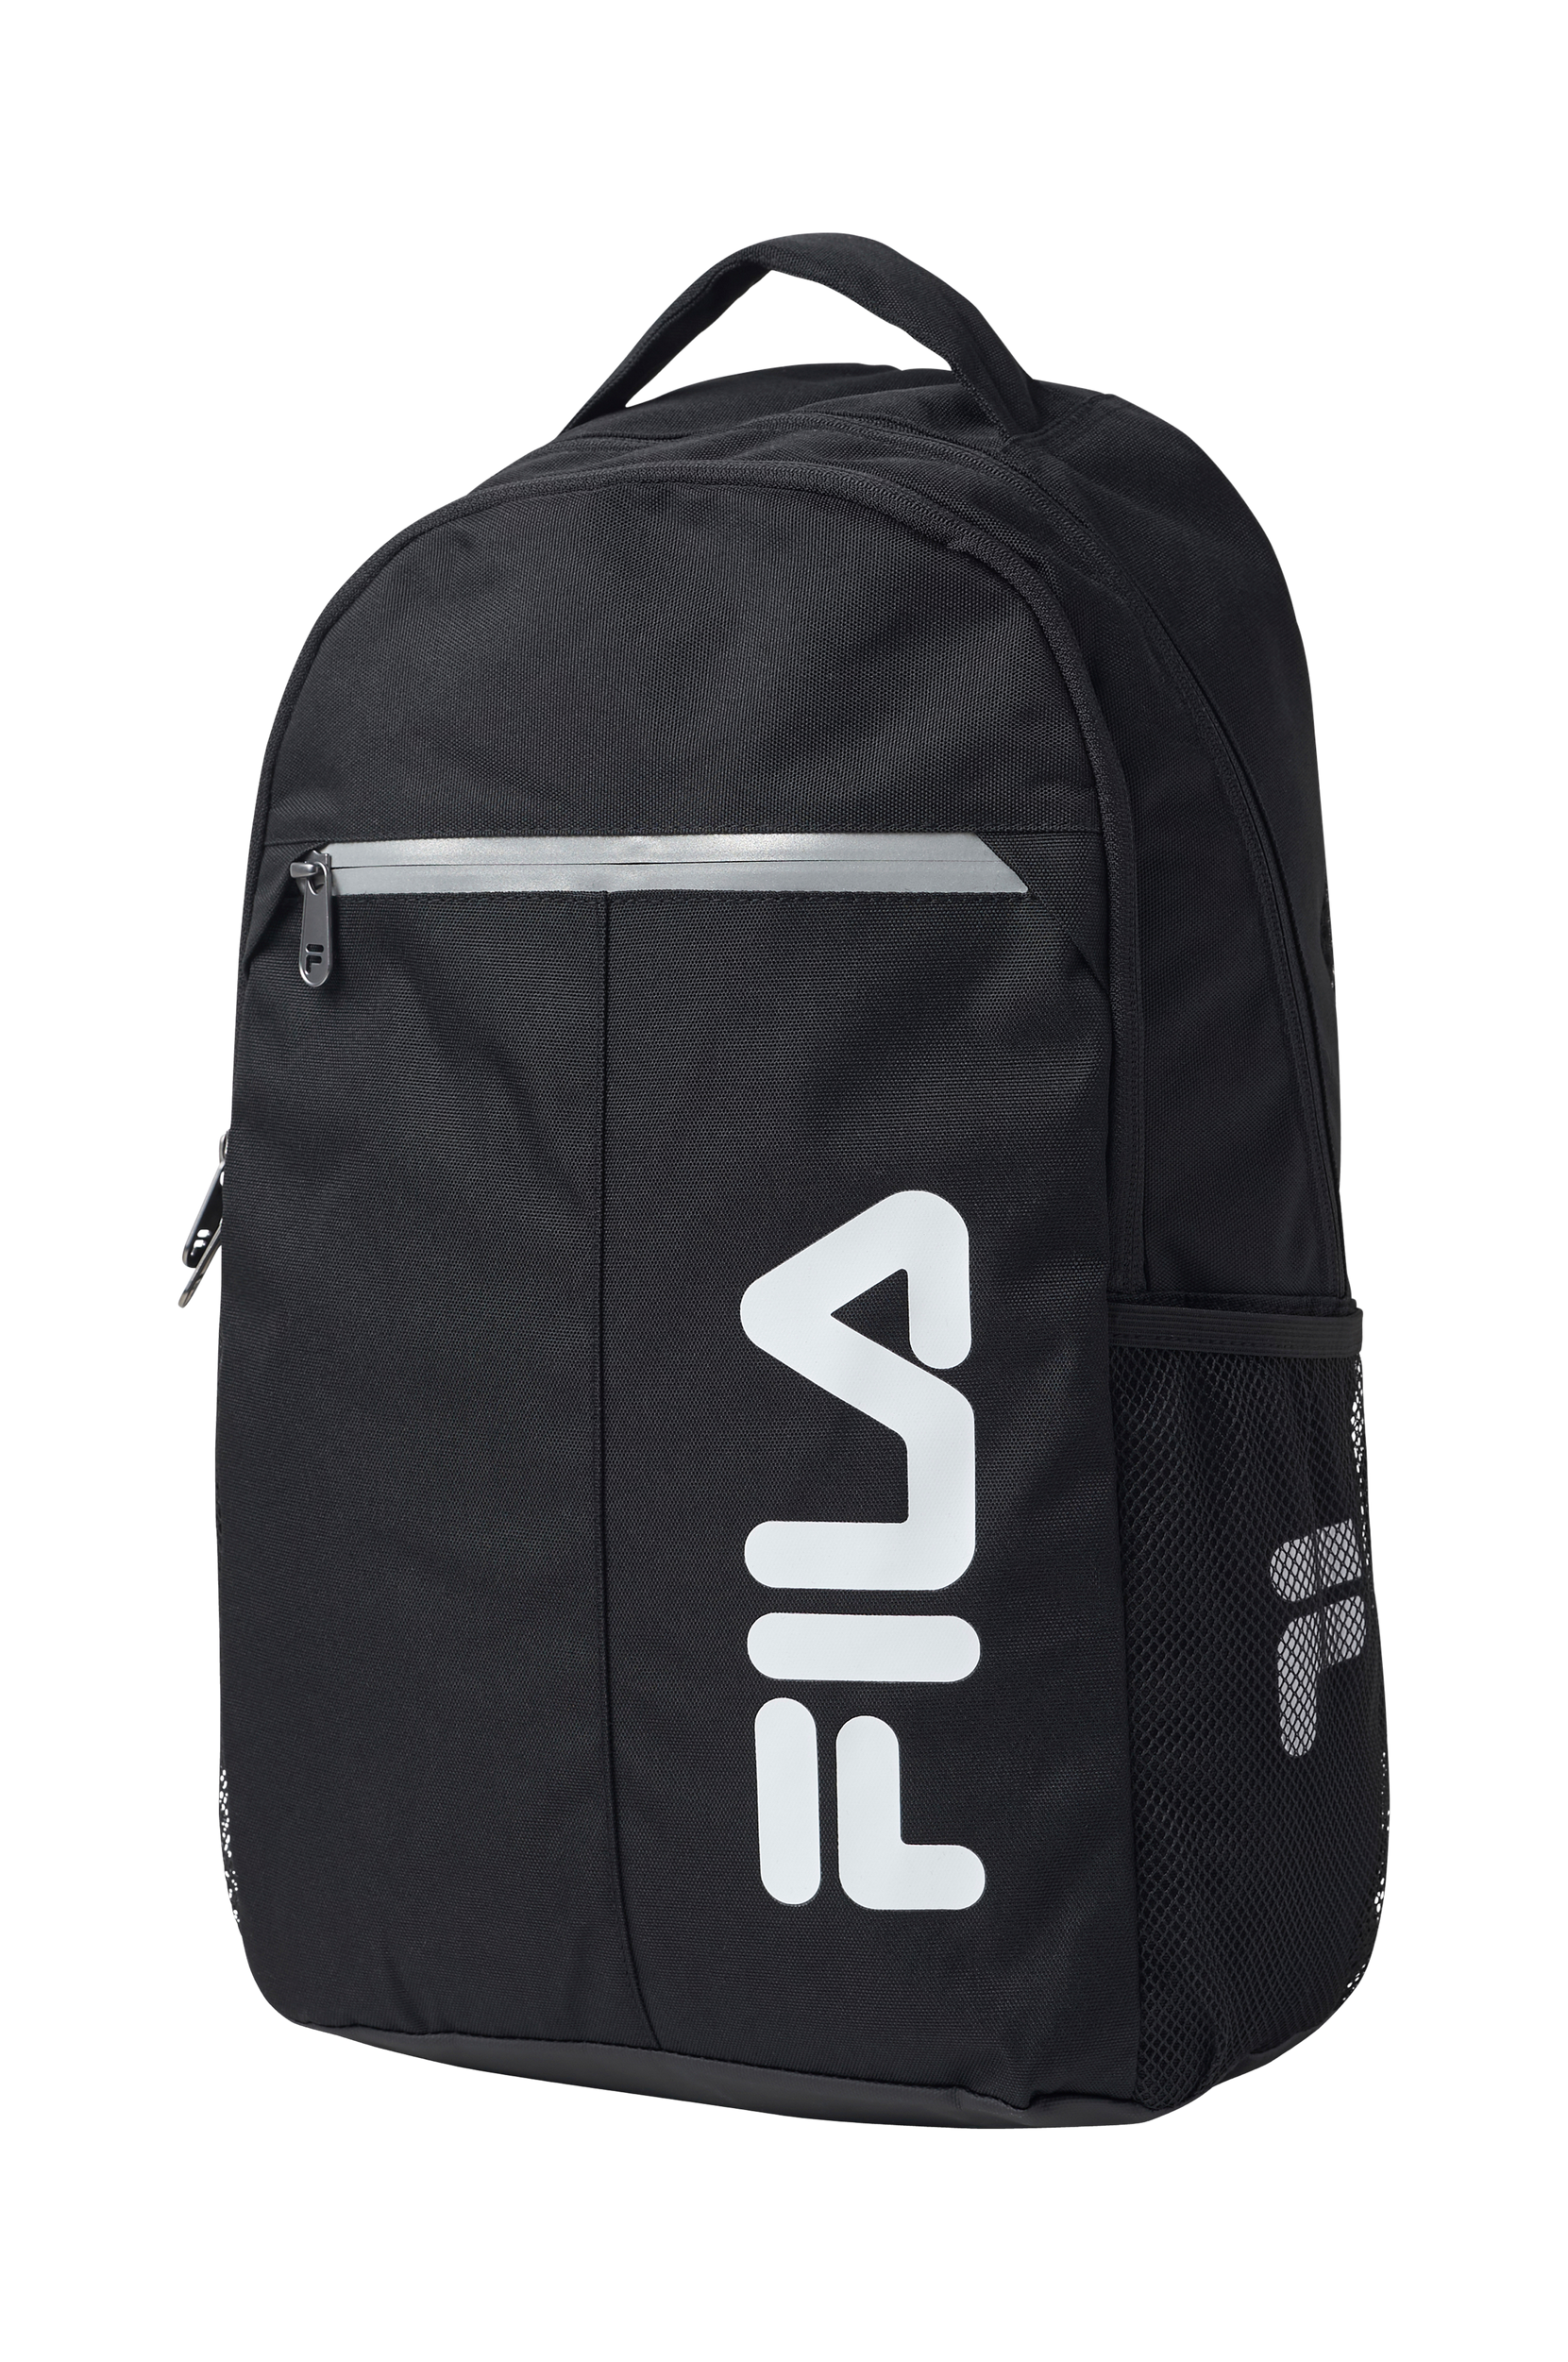 FILA - Ryggsäck Folsom Active Vertical Backpack - Svart - ONE SIZE